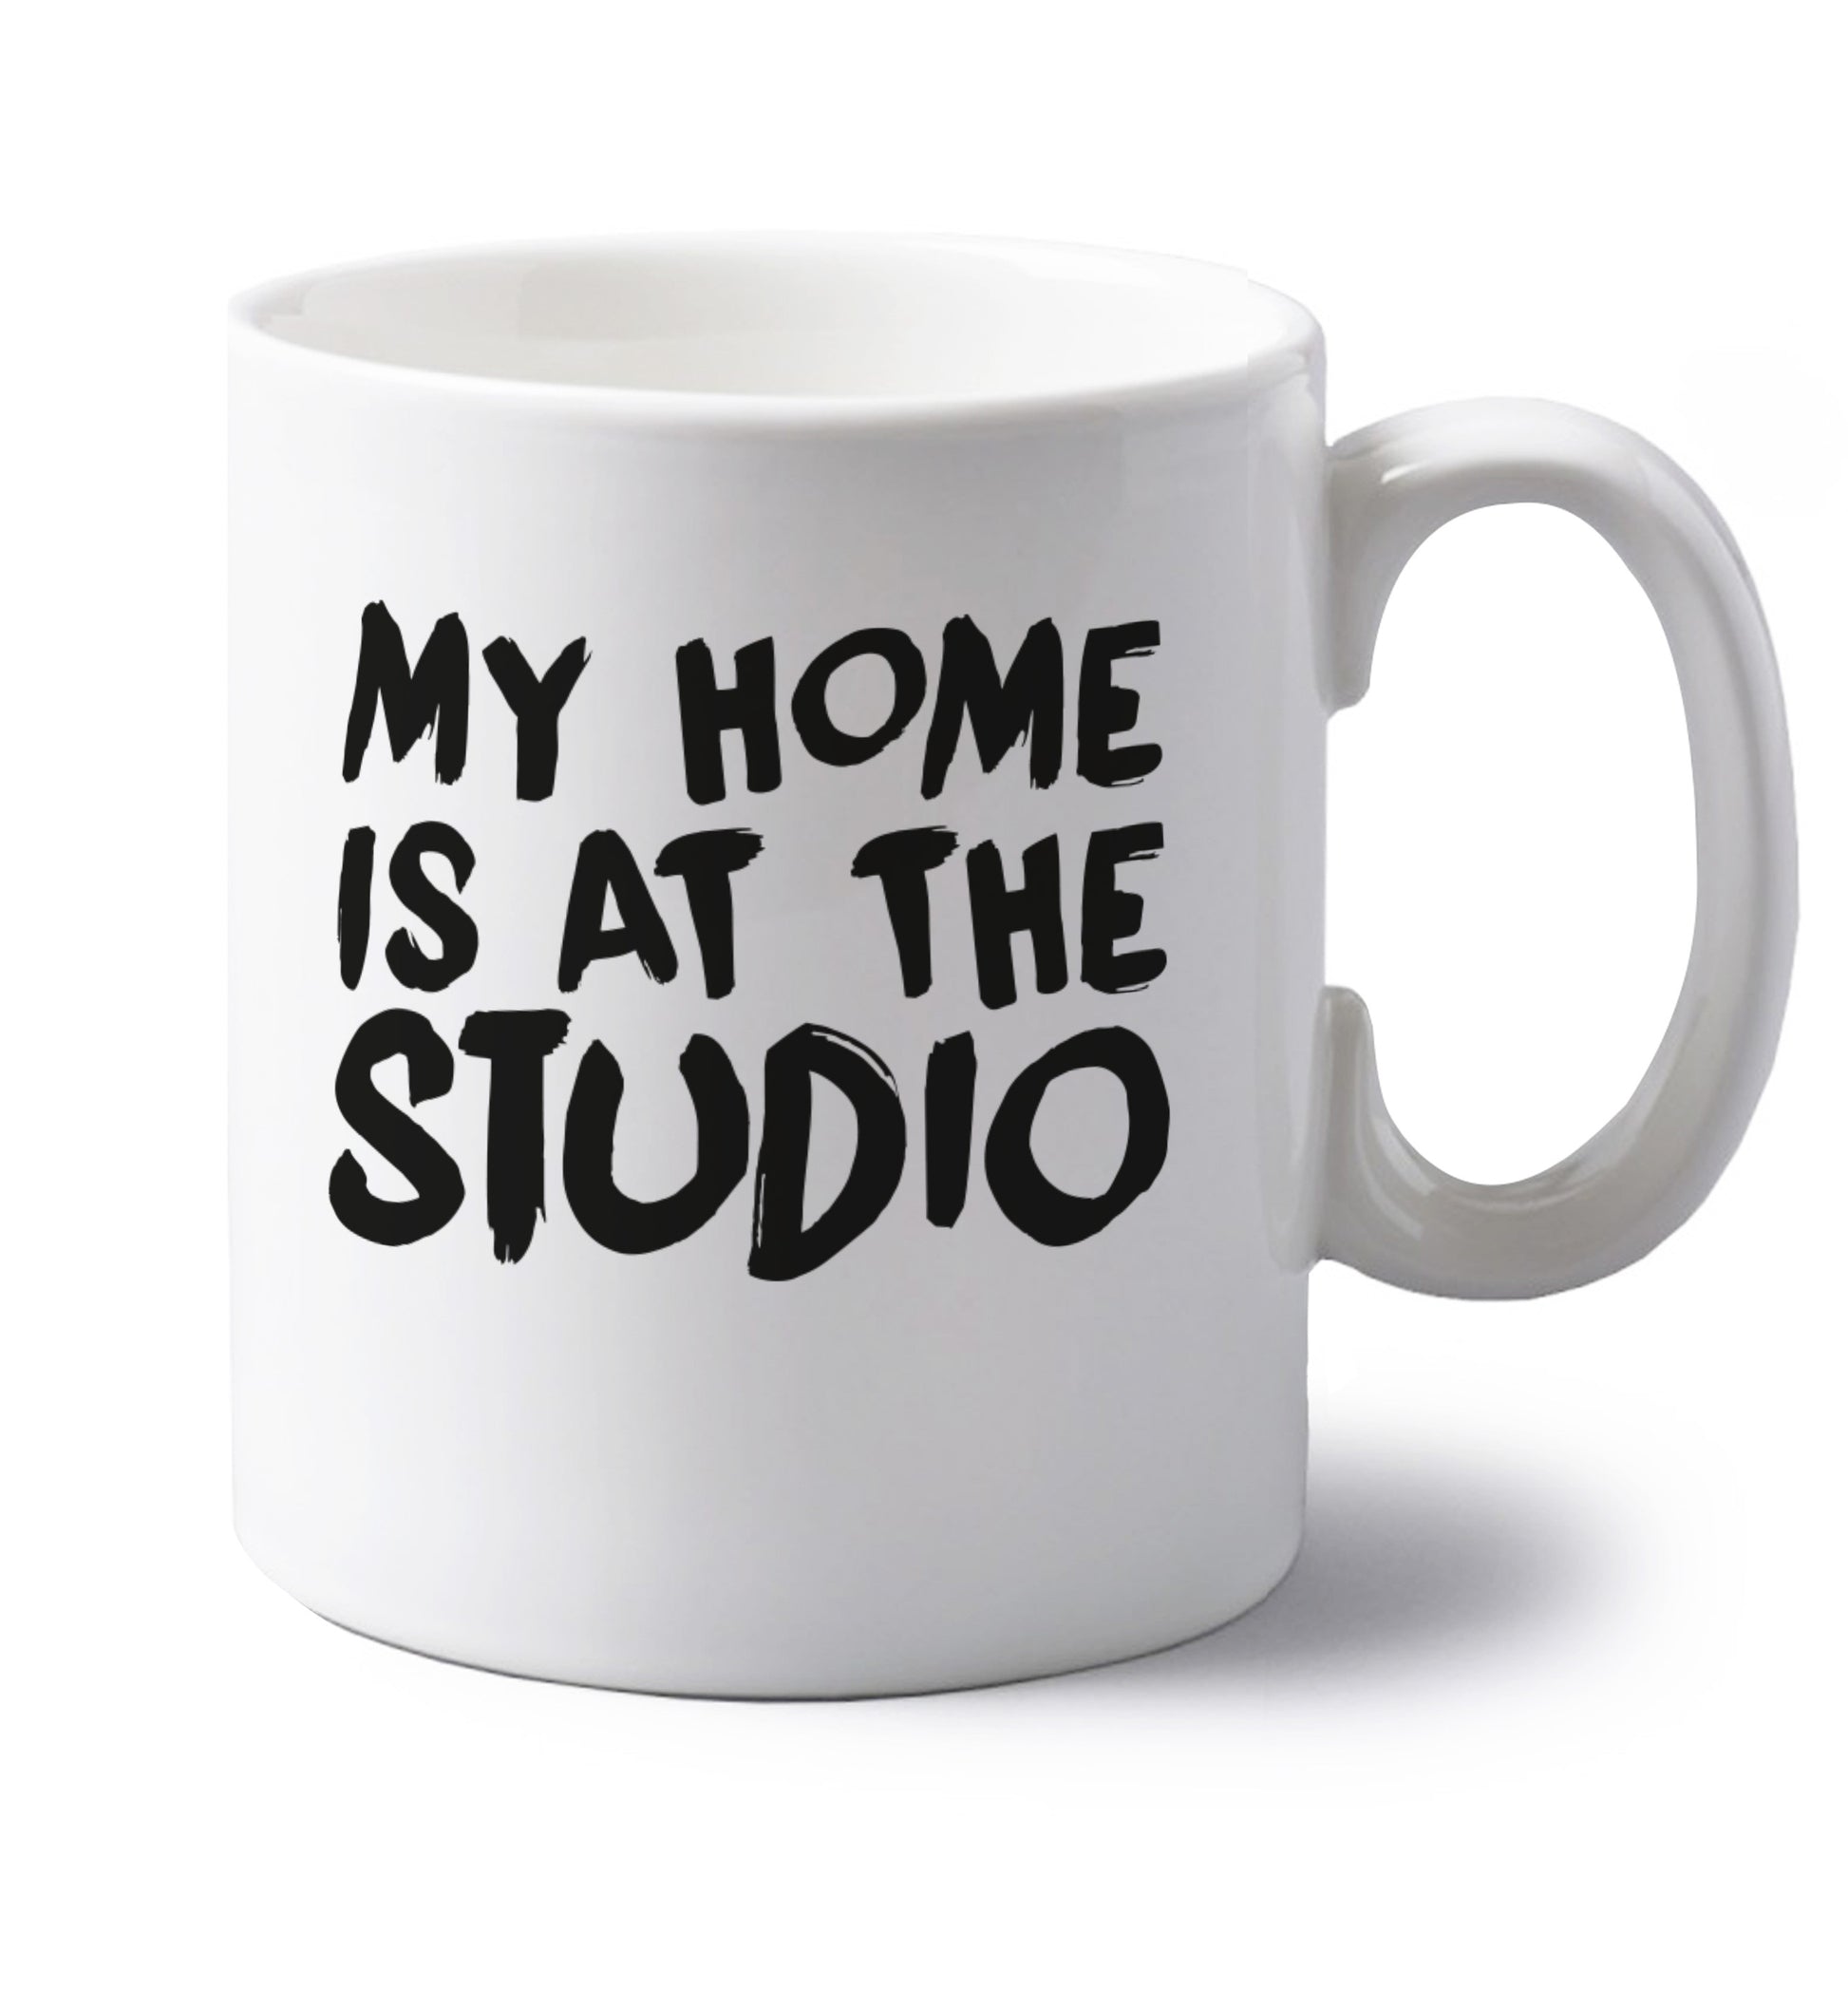 My home is at the studio left handed white ceramic mug 